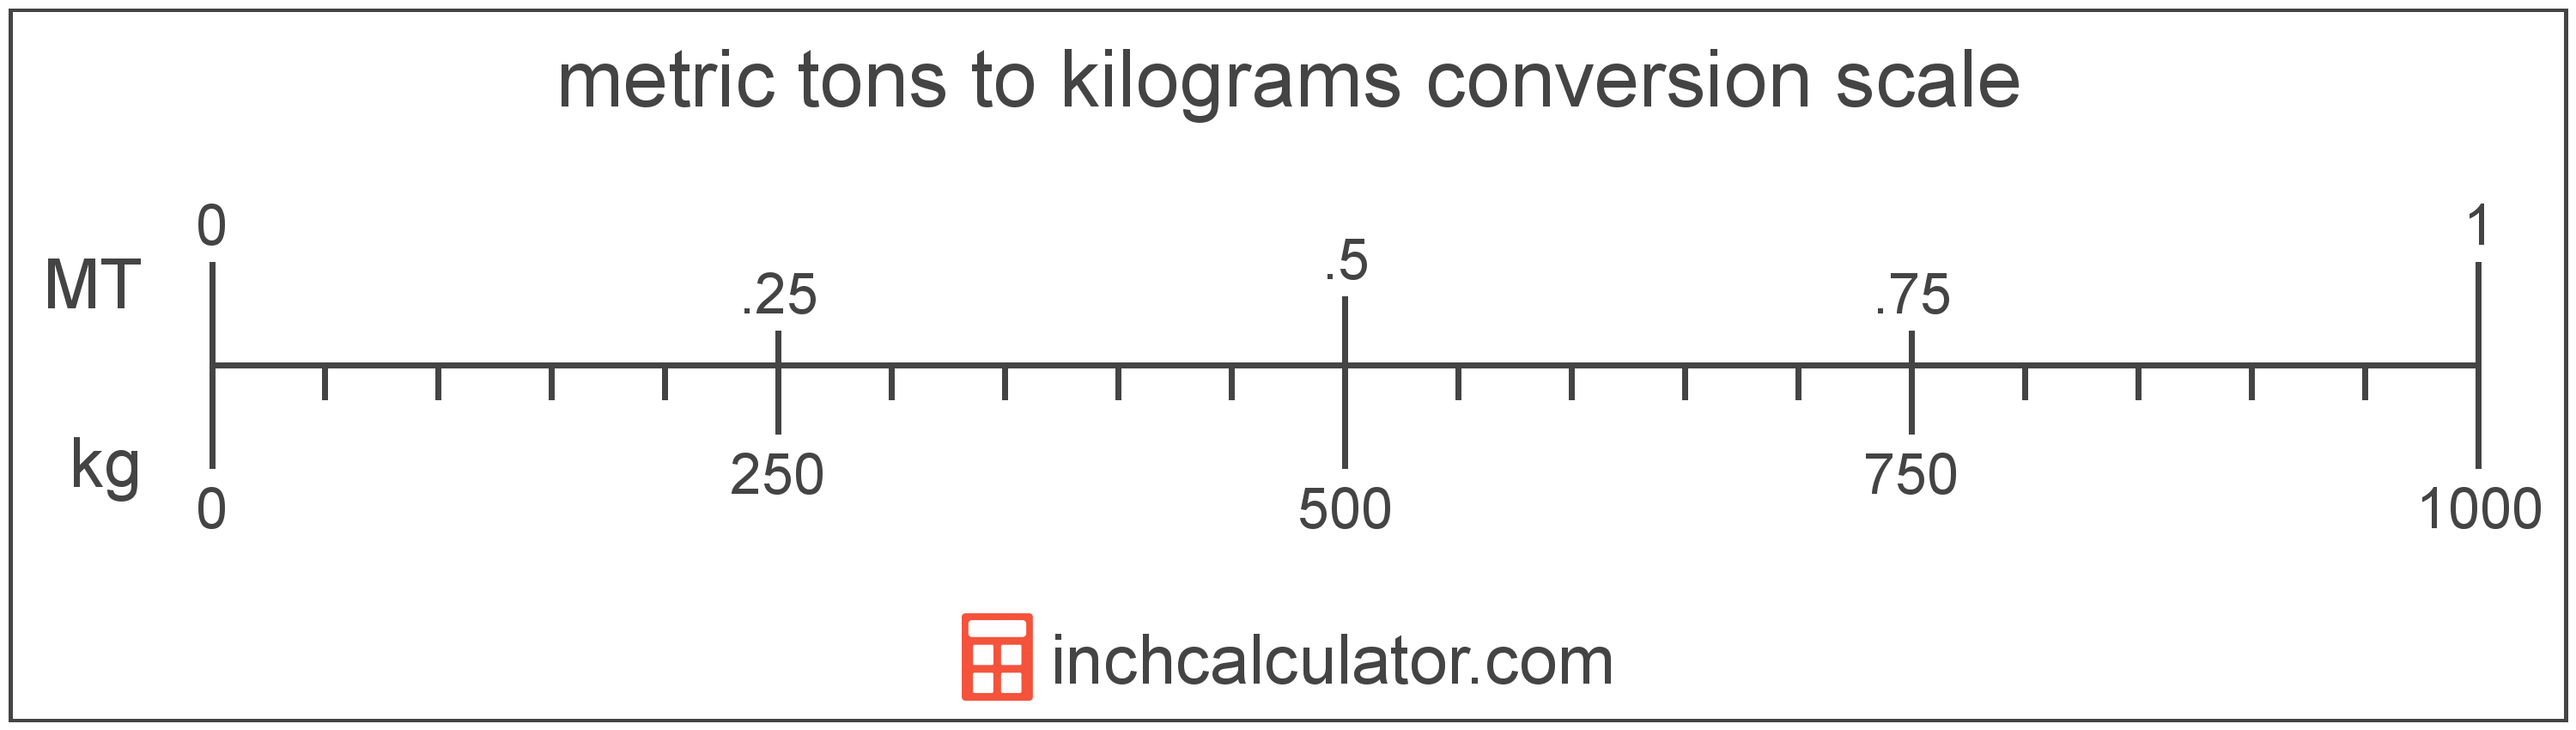 kombination paperback Okklusion Metric Tons (Tonnes) to Kilograms Conversion (t to kg)